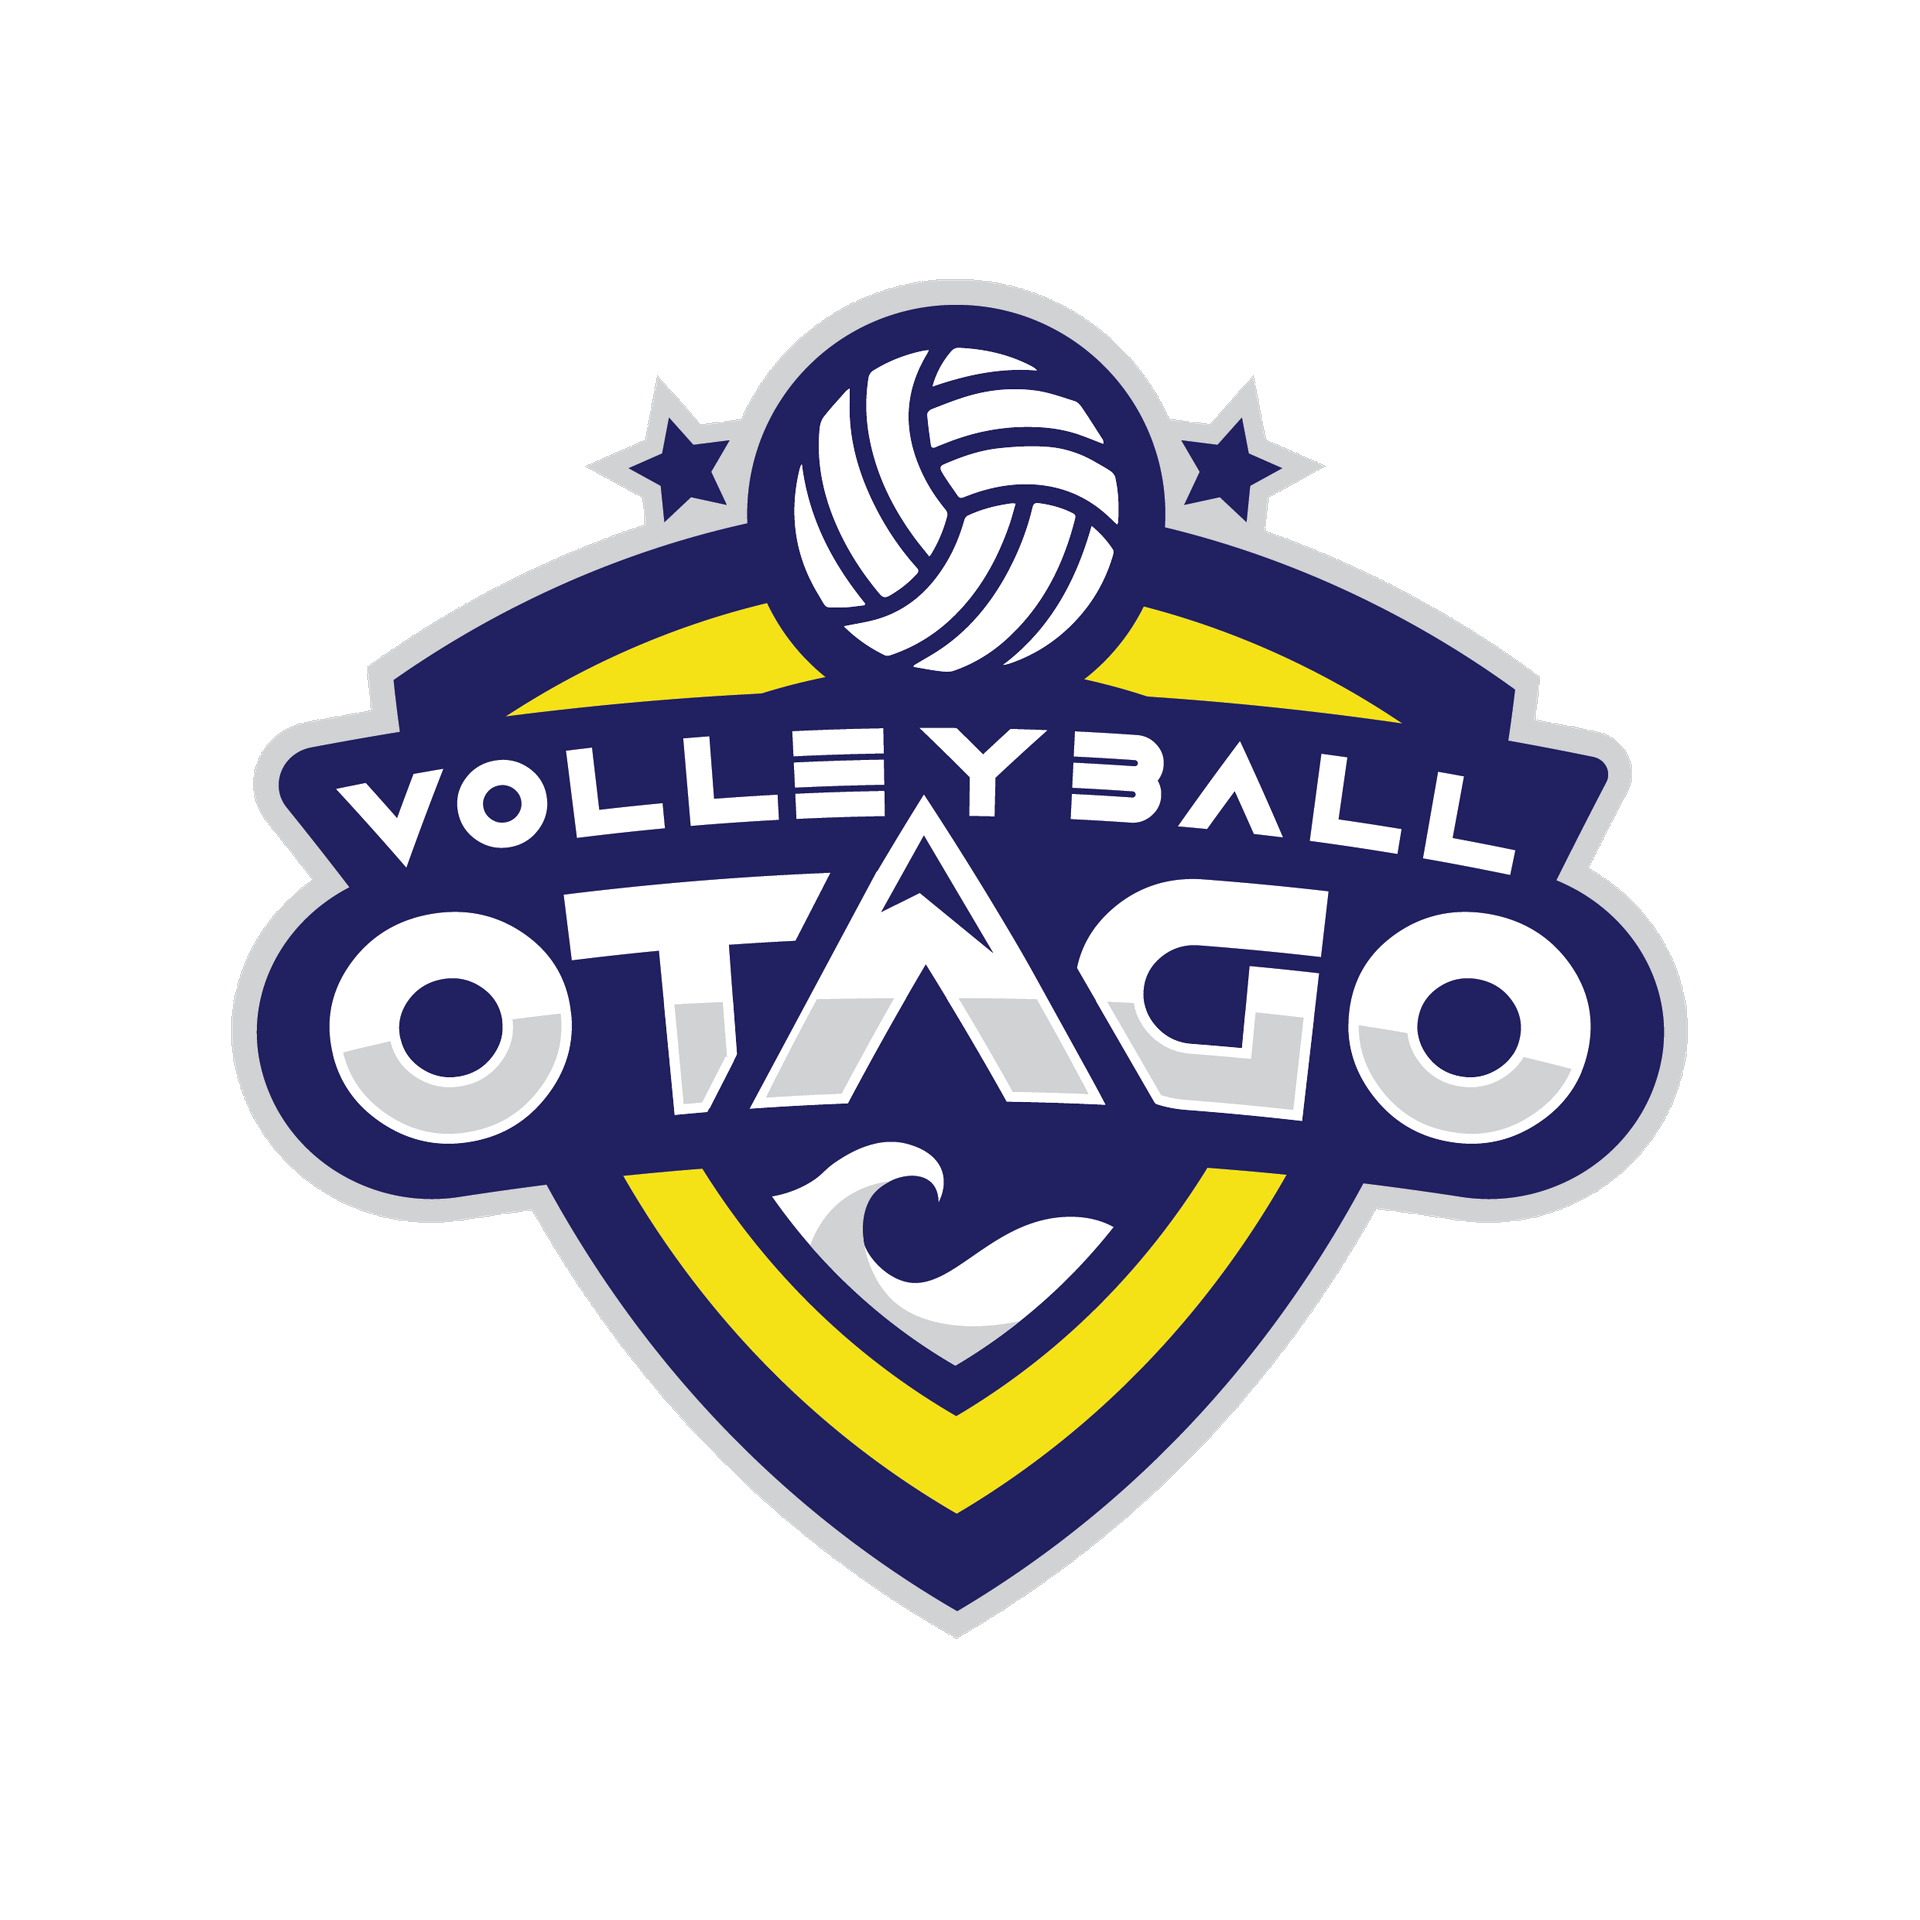 Vacancy: Volleyball Otago